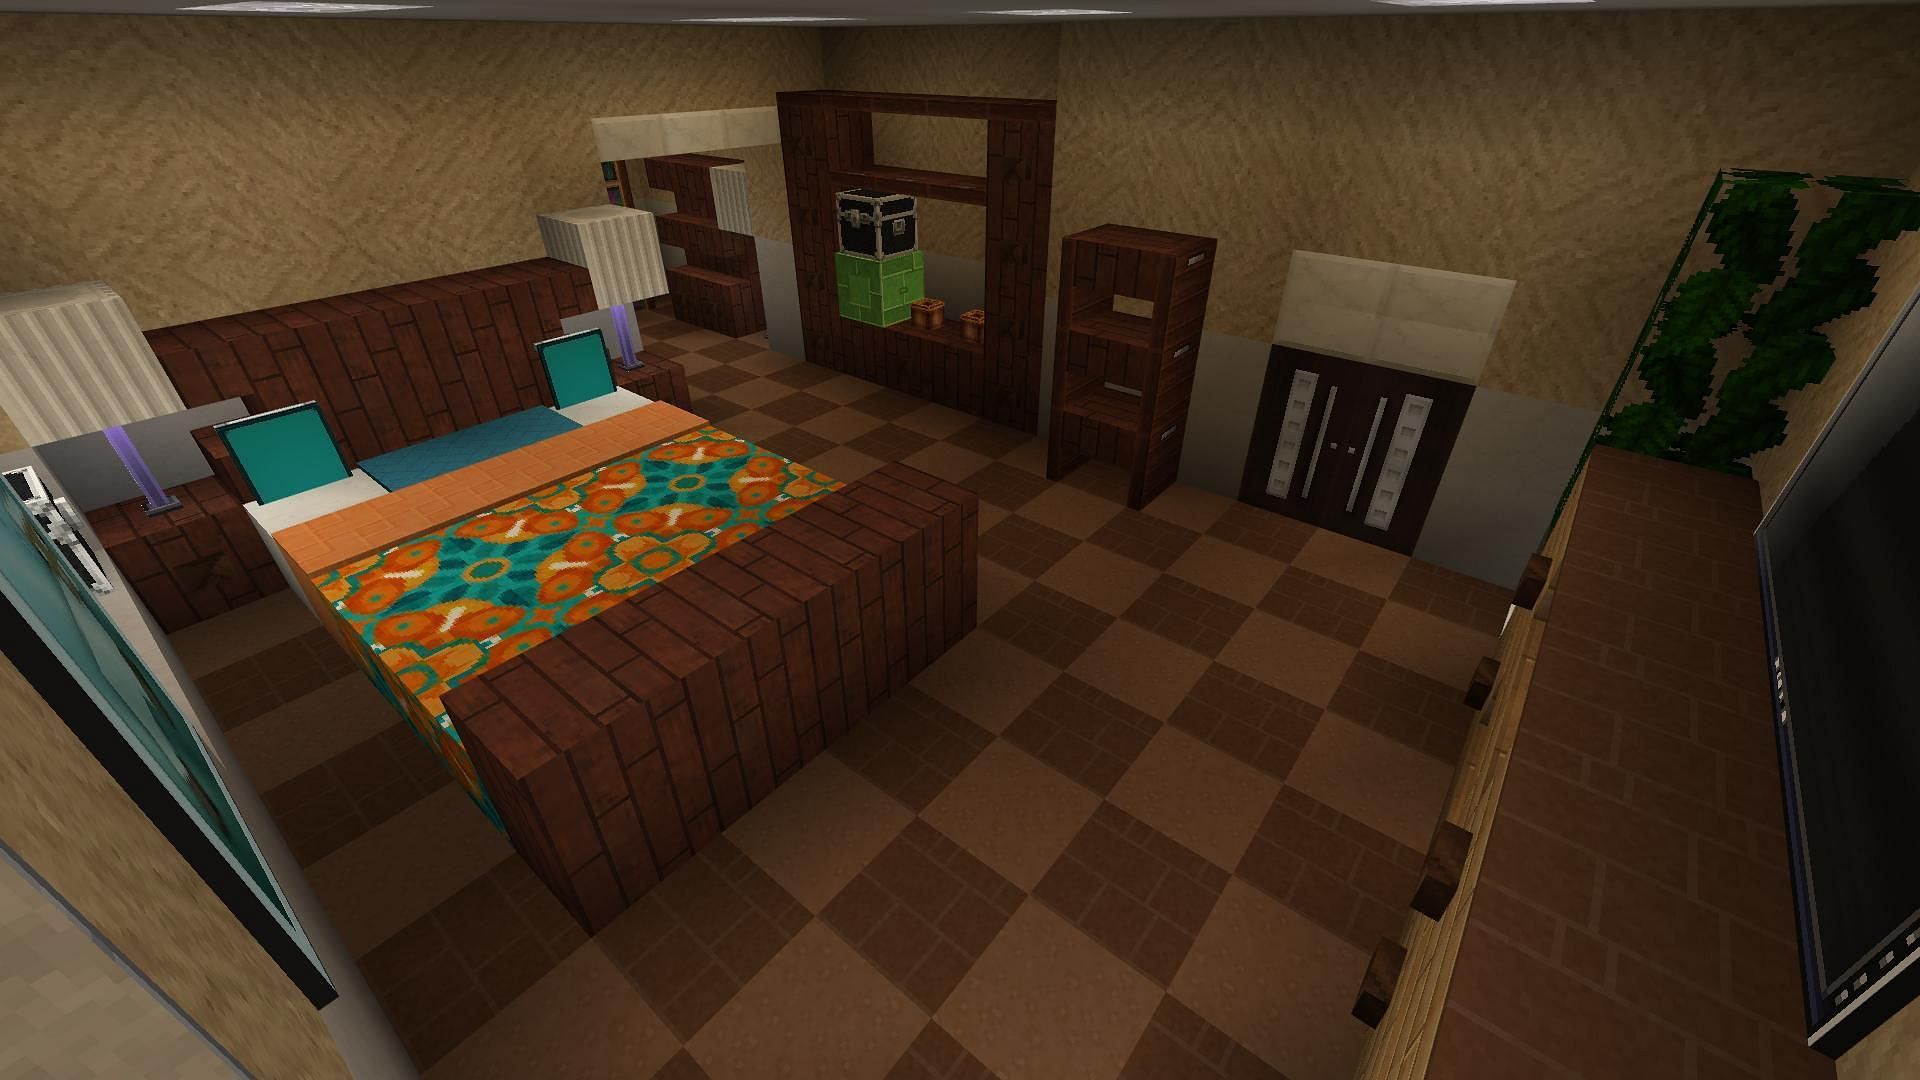 A master bedroom in Minecraft (Image via u/RICKY_CRAFT on Reddit)